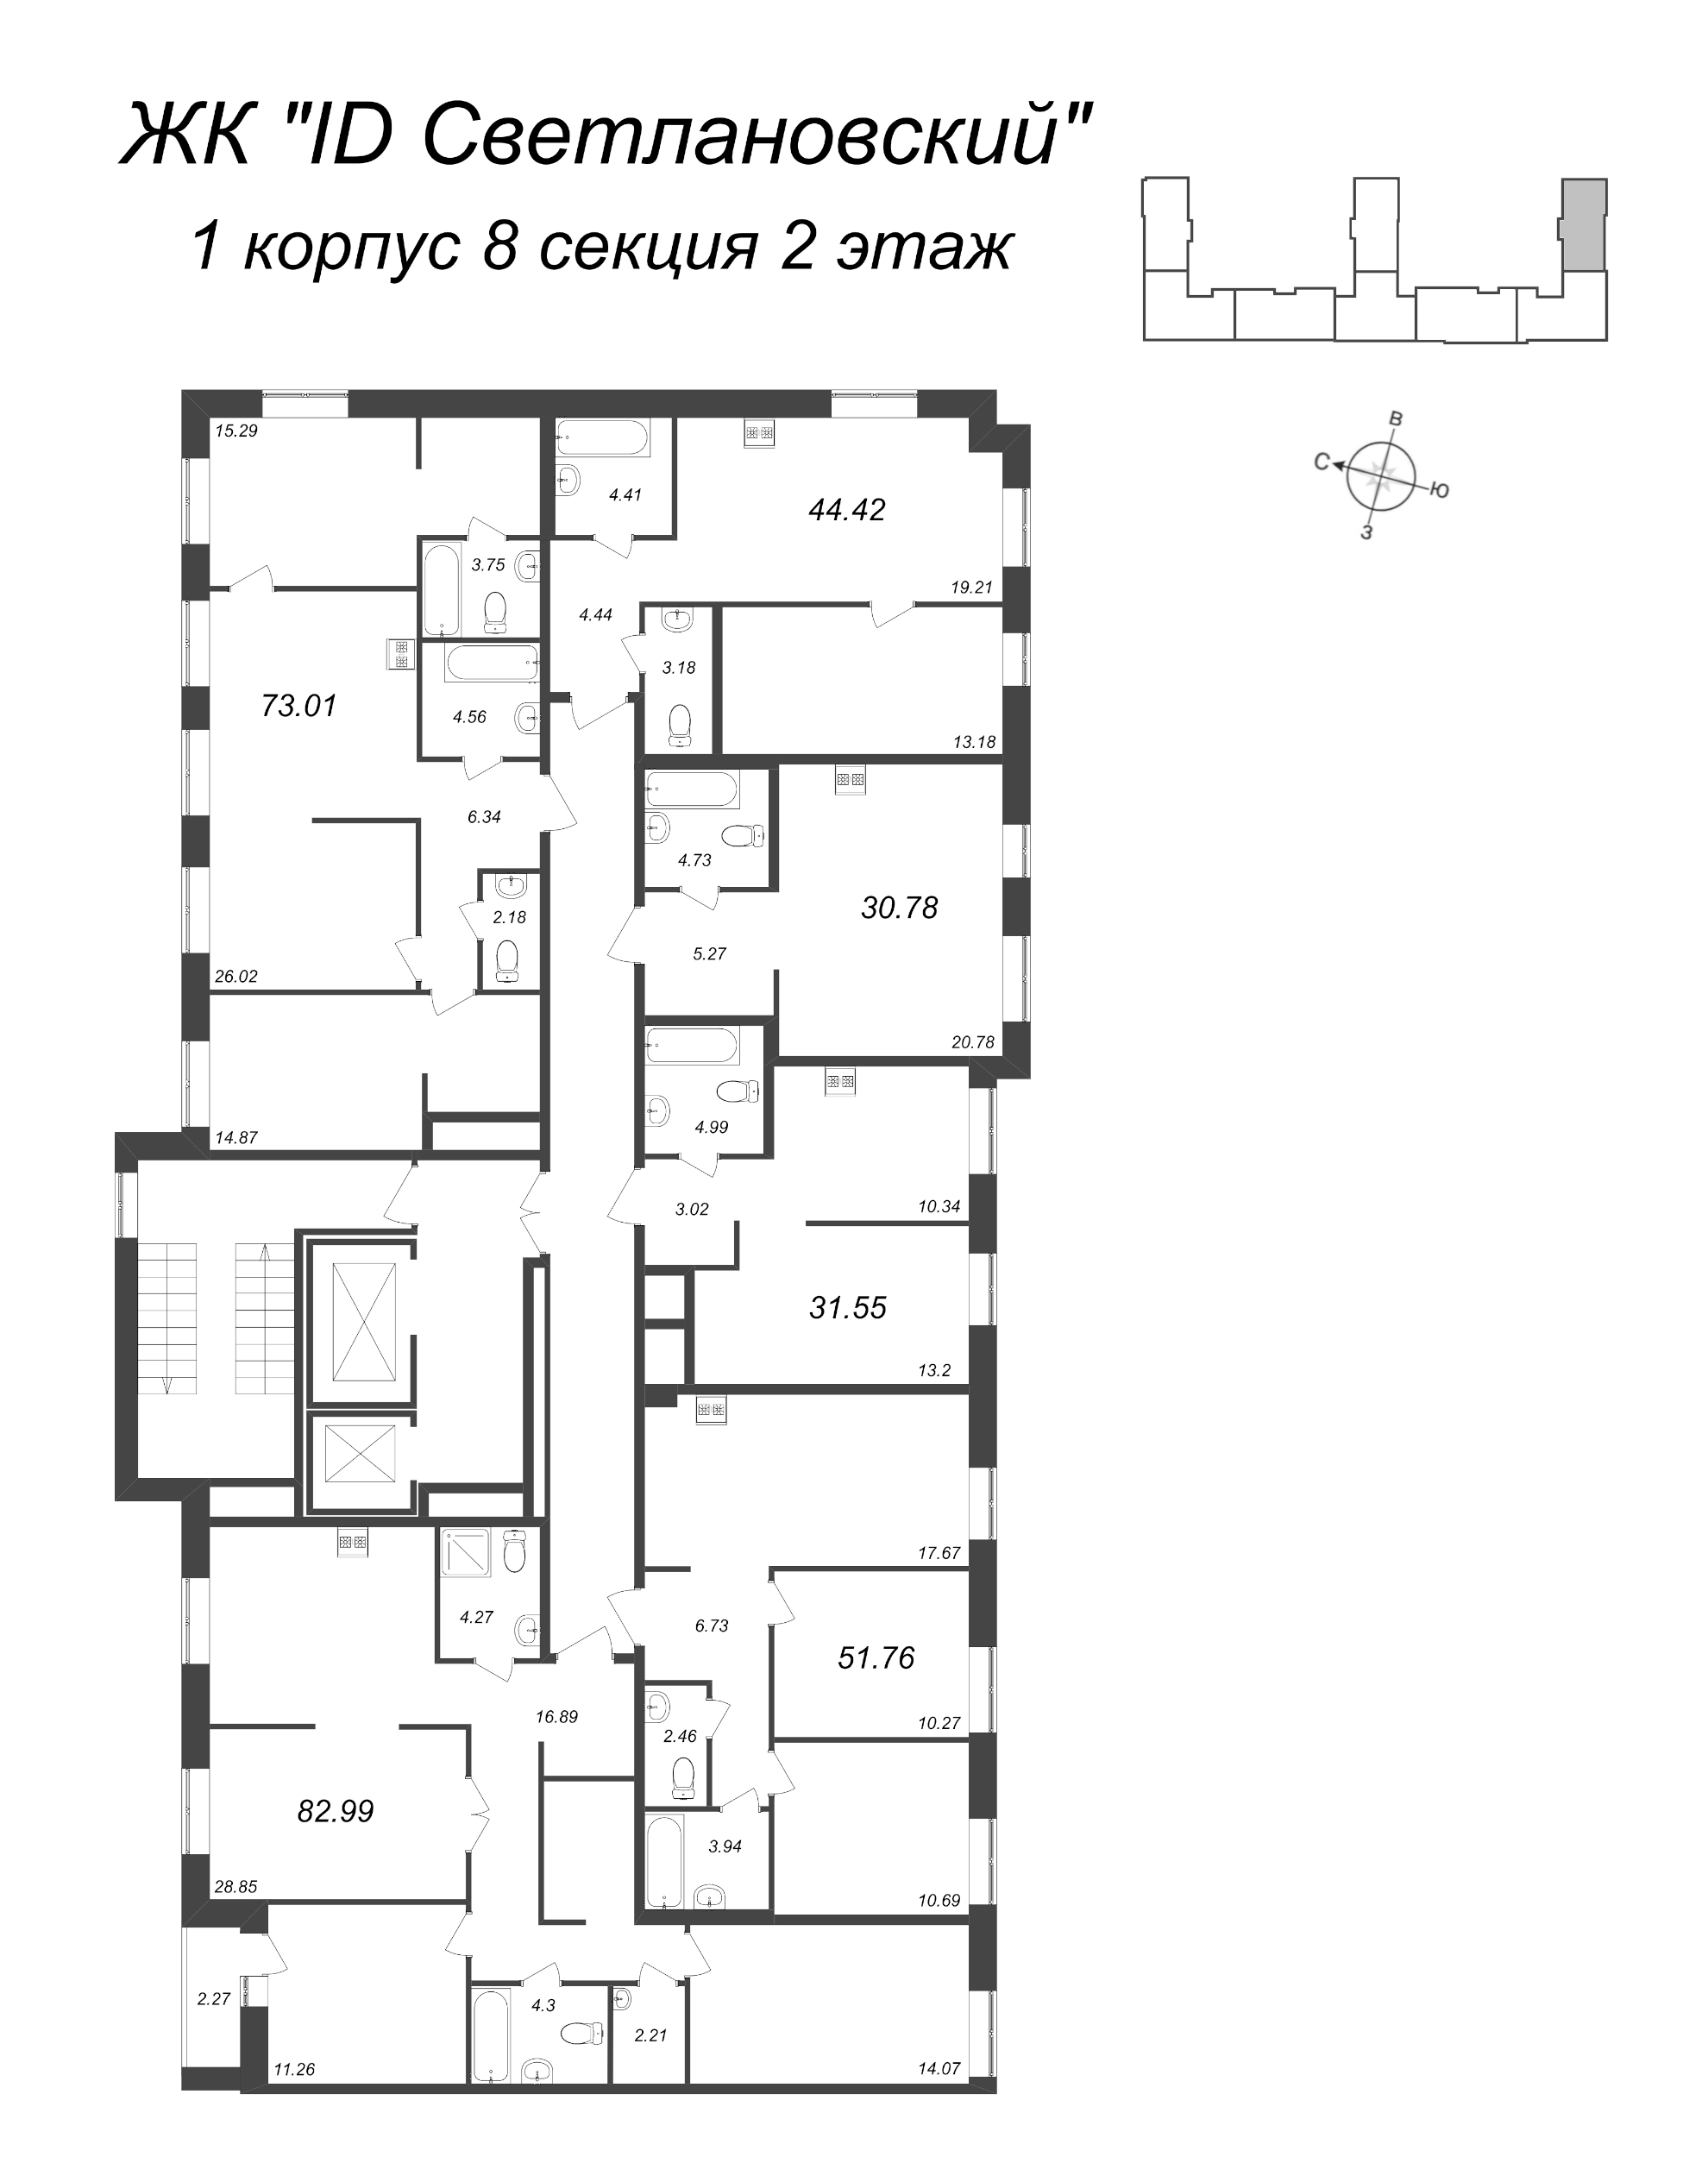 3-комнатная (Евро) квартира, 82.99 м² - планировка этажа